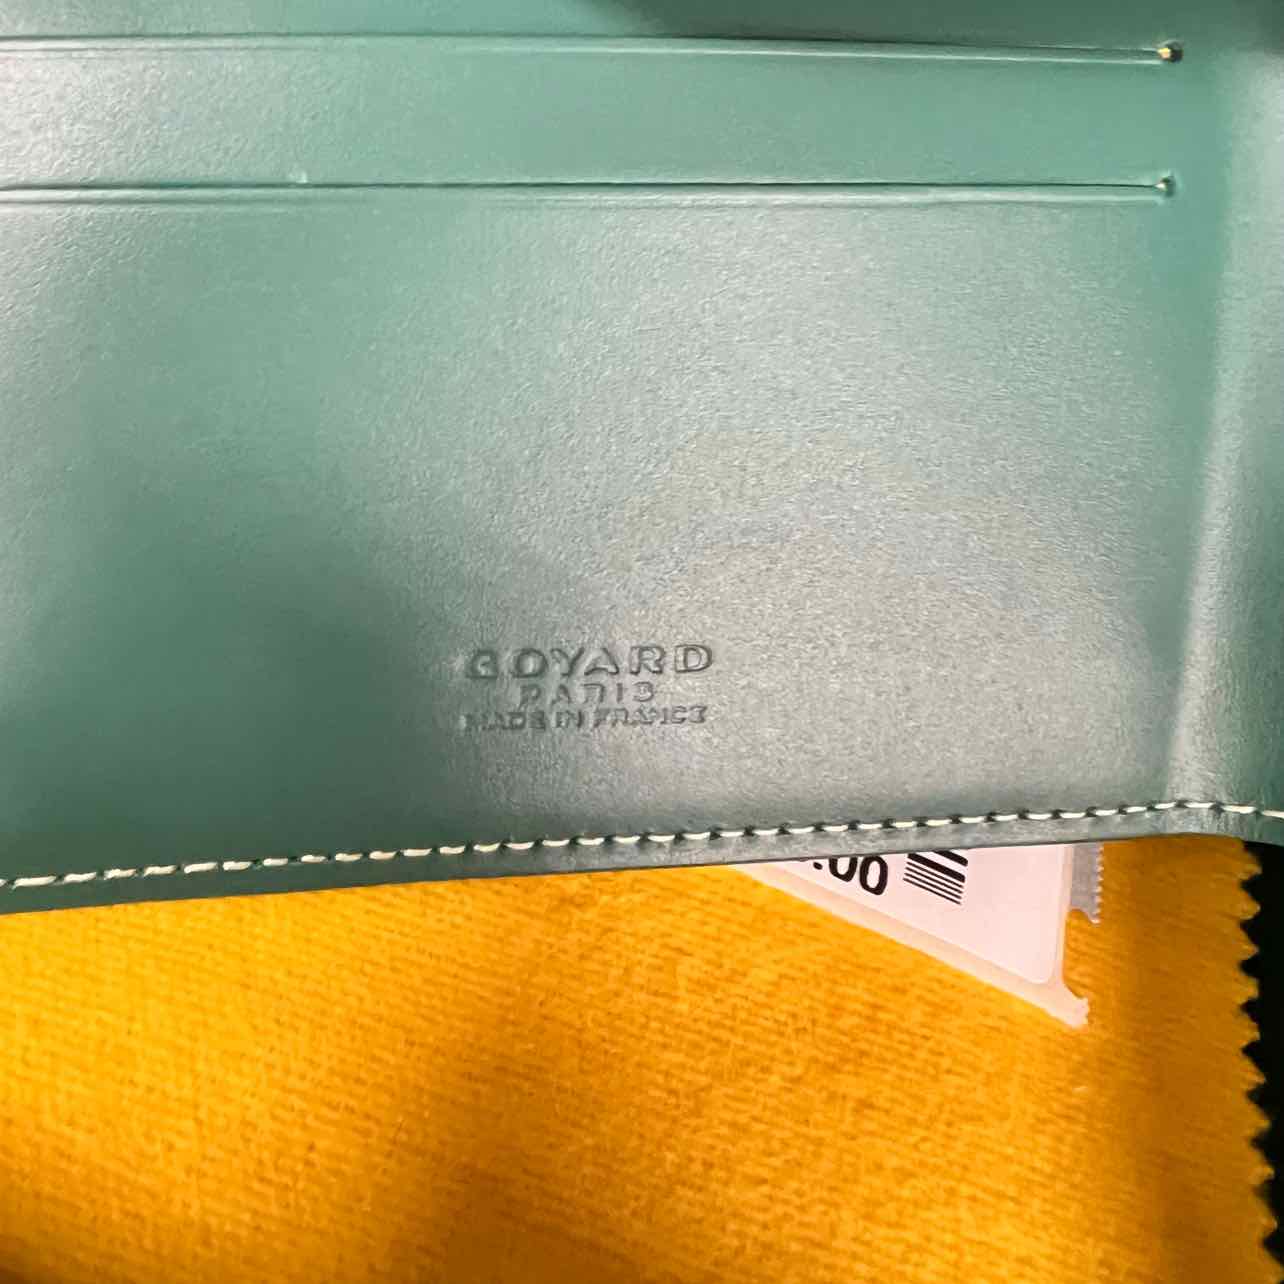 Goyard Wallet "VICTOIRE COMPANION" New Green Size OS